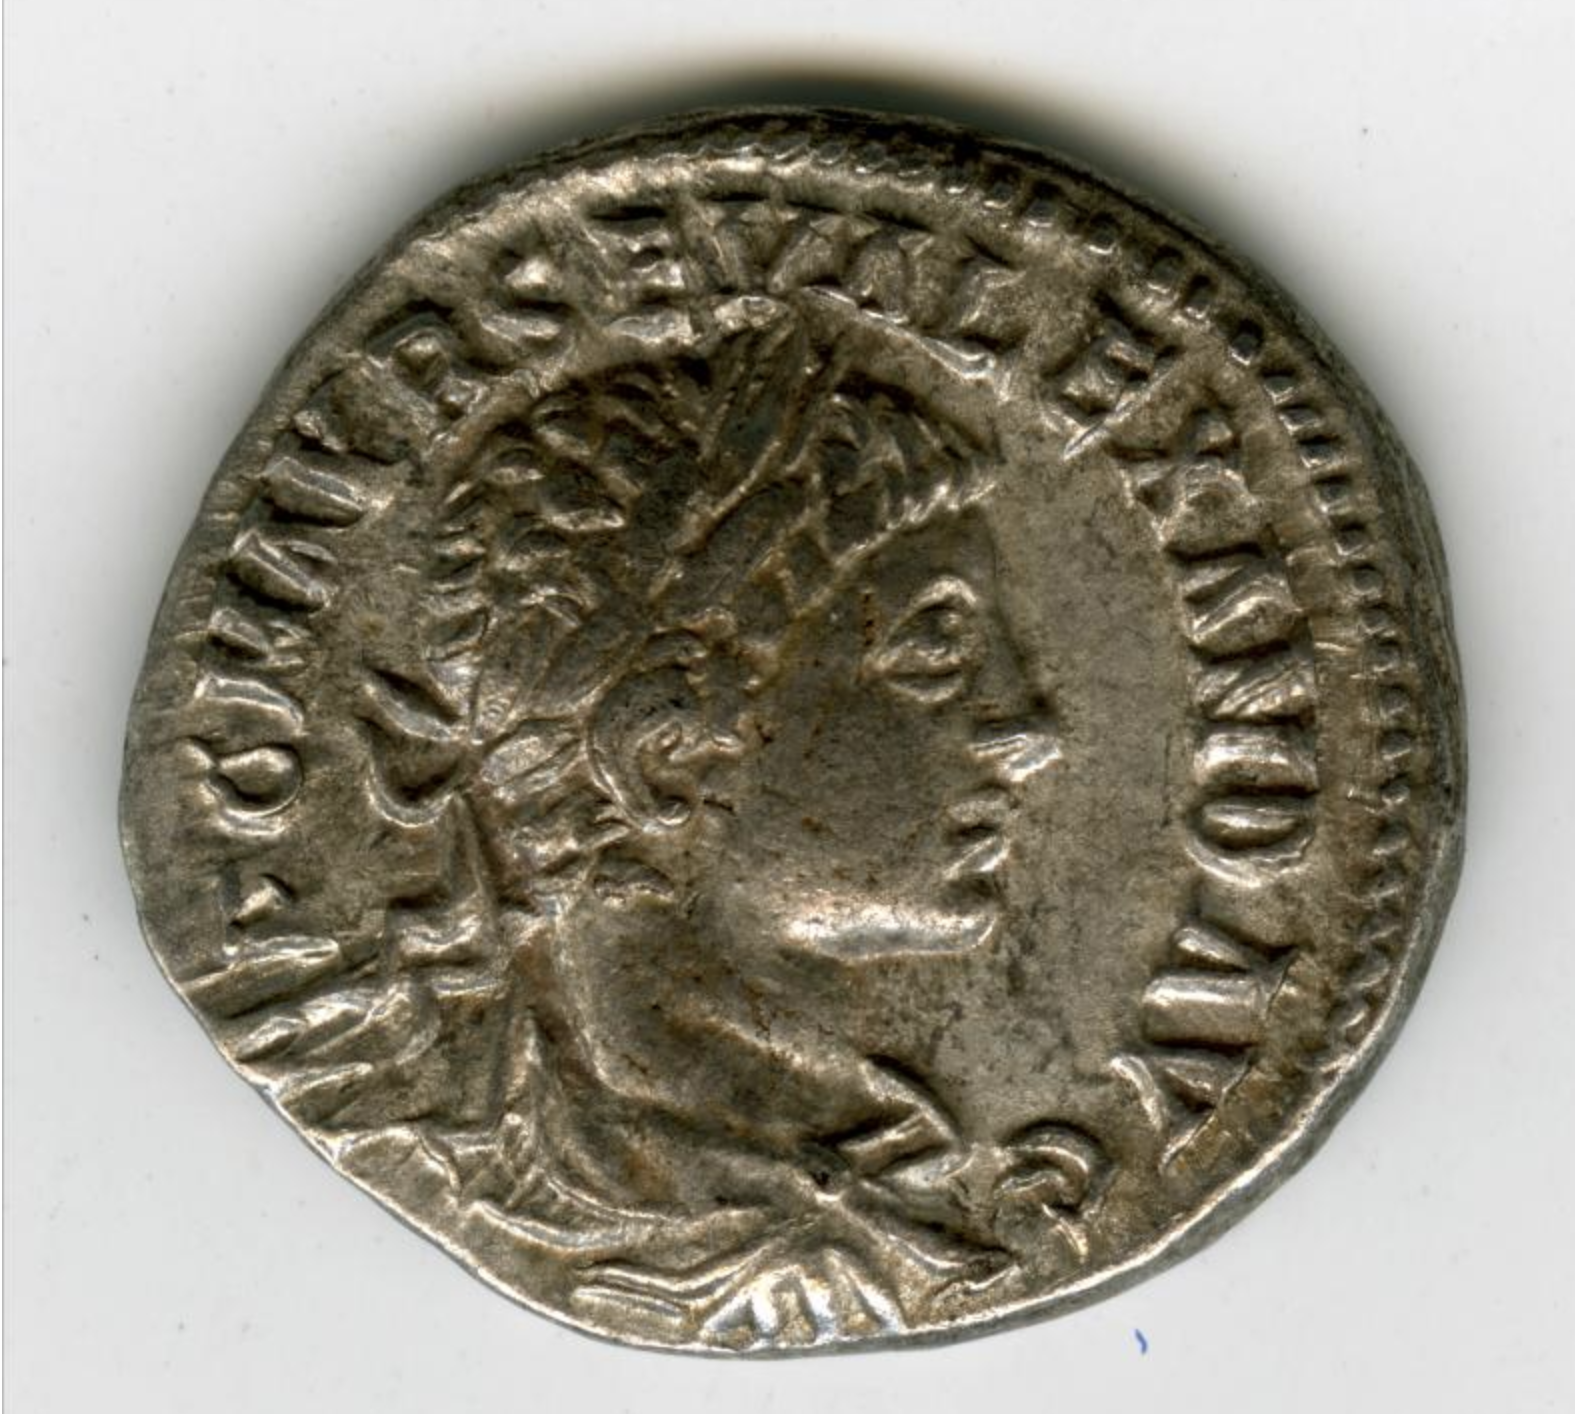 Coin showing Severus Alexander